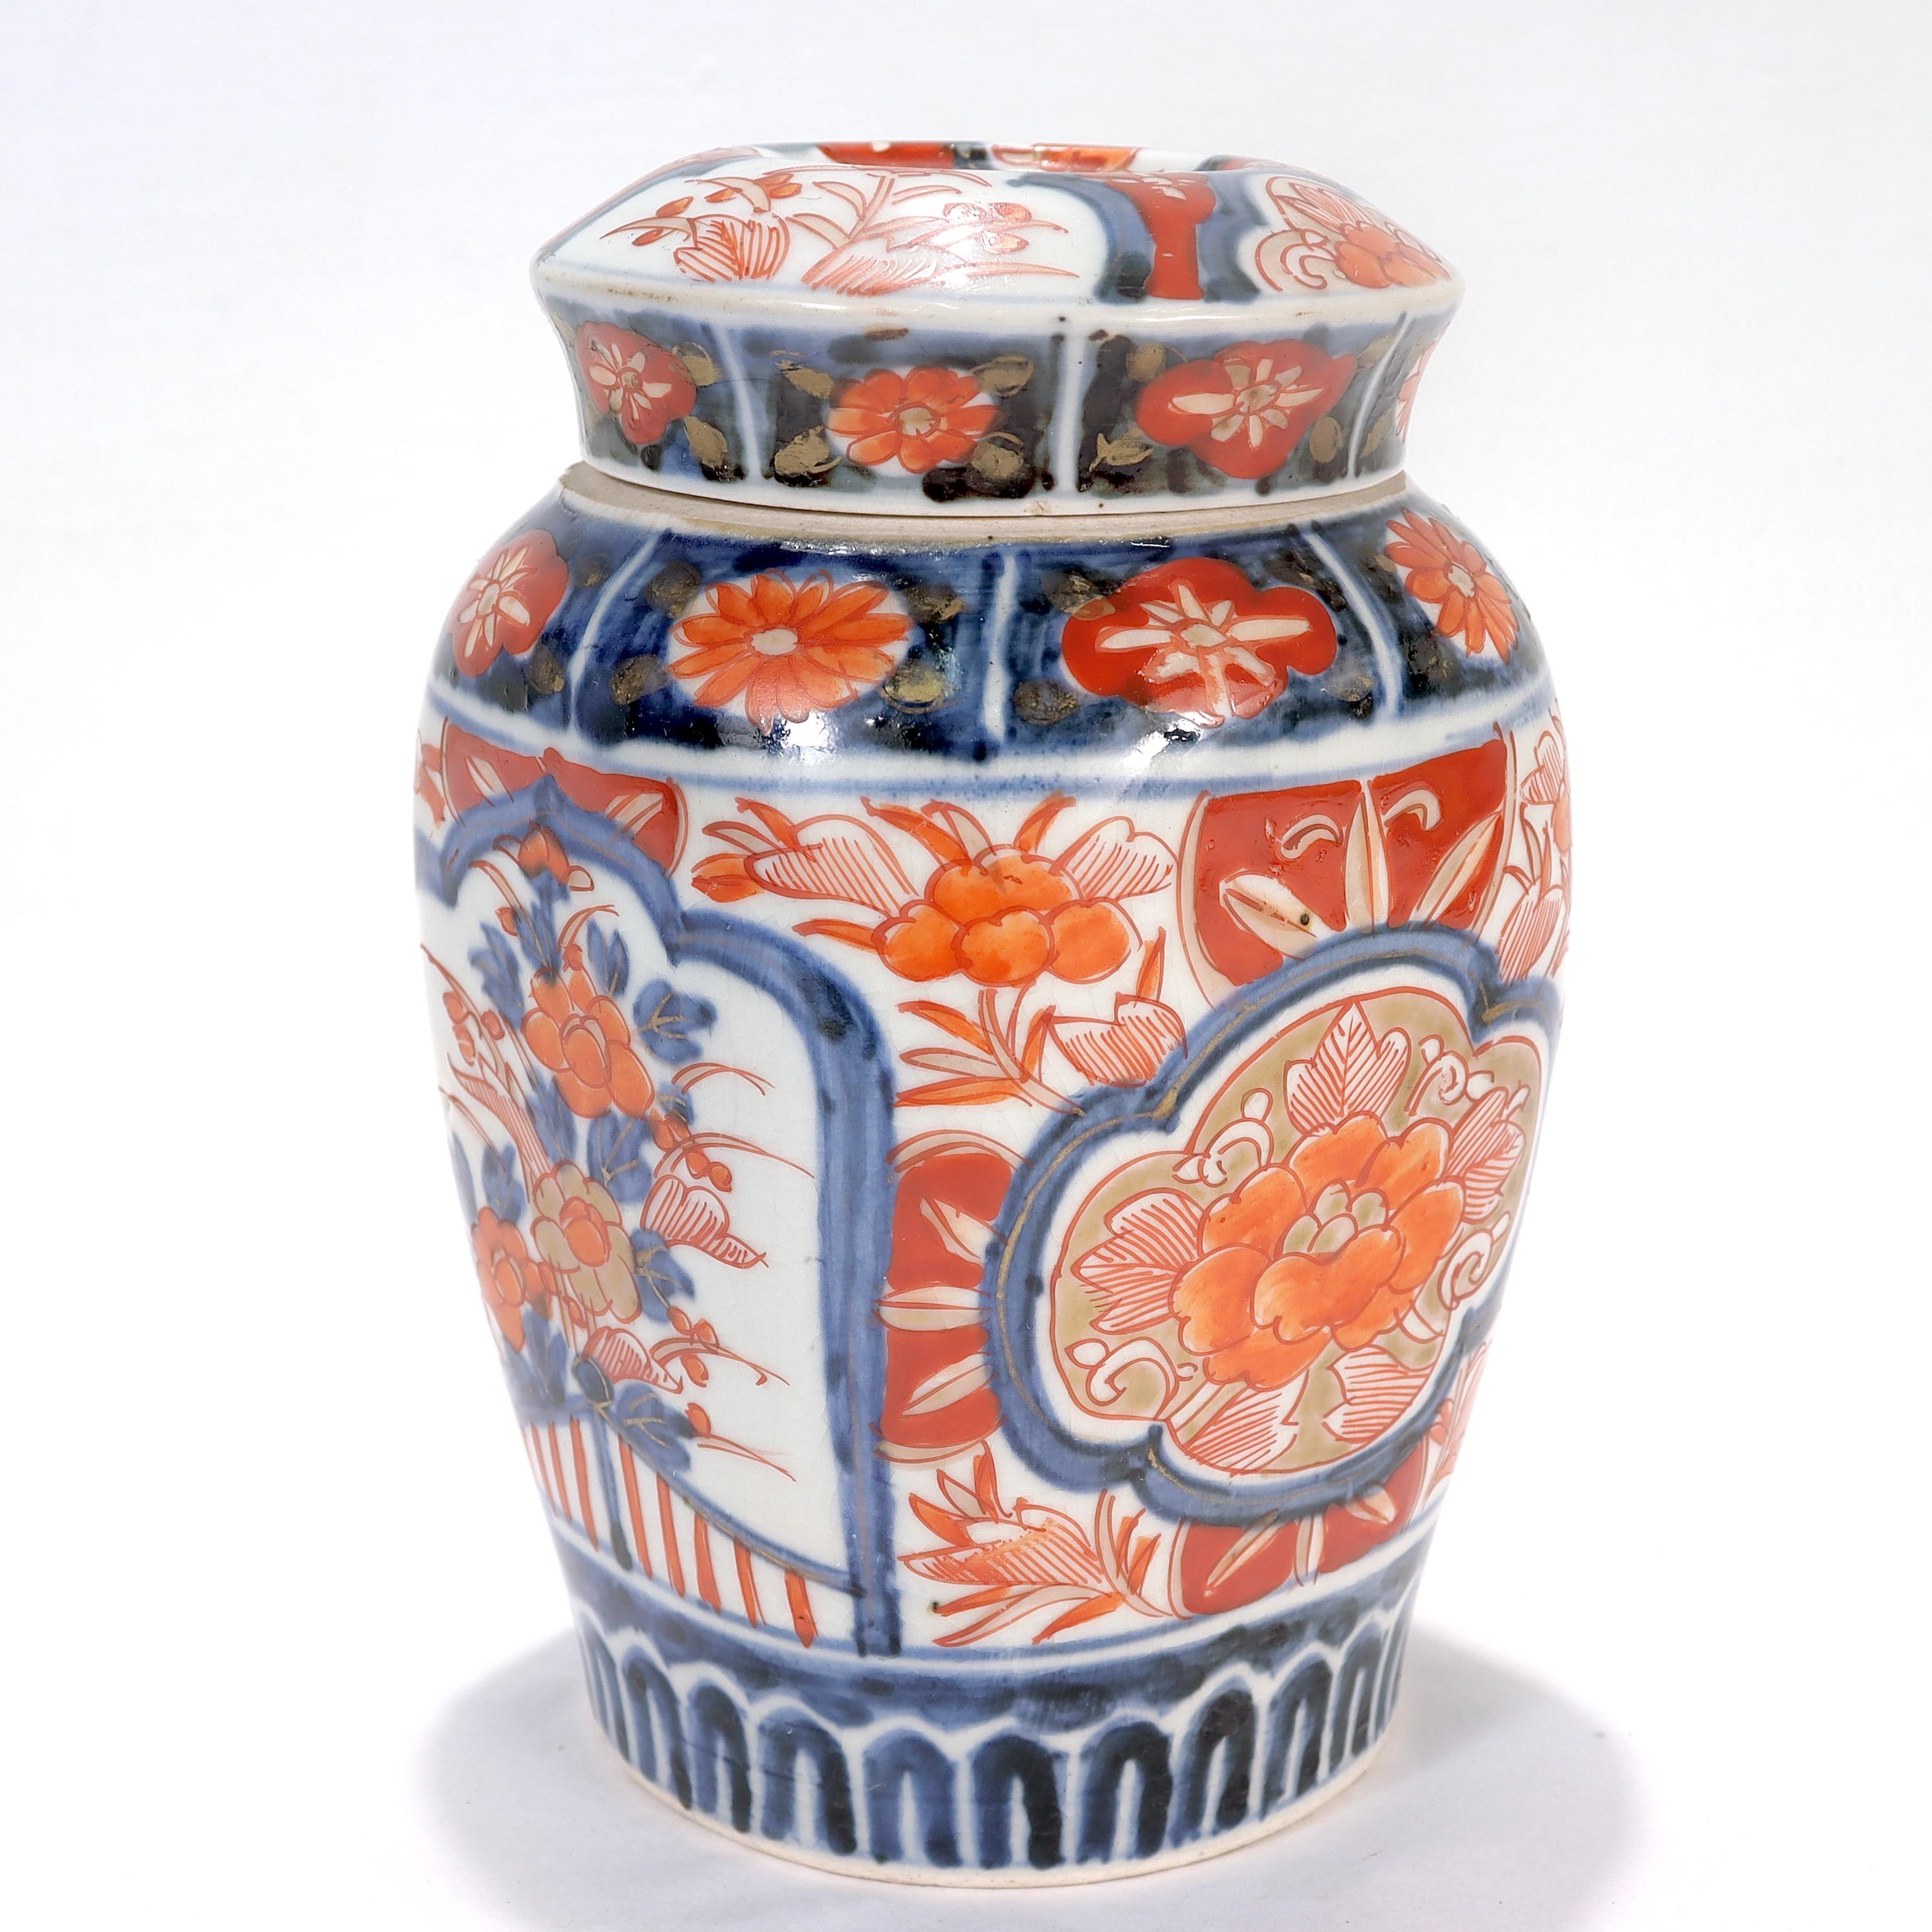 Altes oder antikes japanisches Imari Porcelain bedecktes JAR oder Urne (20. Jahrhundert) im Angebot